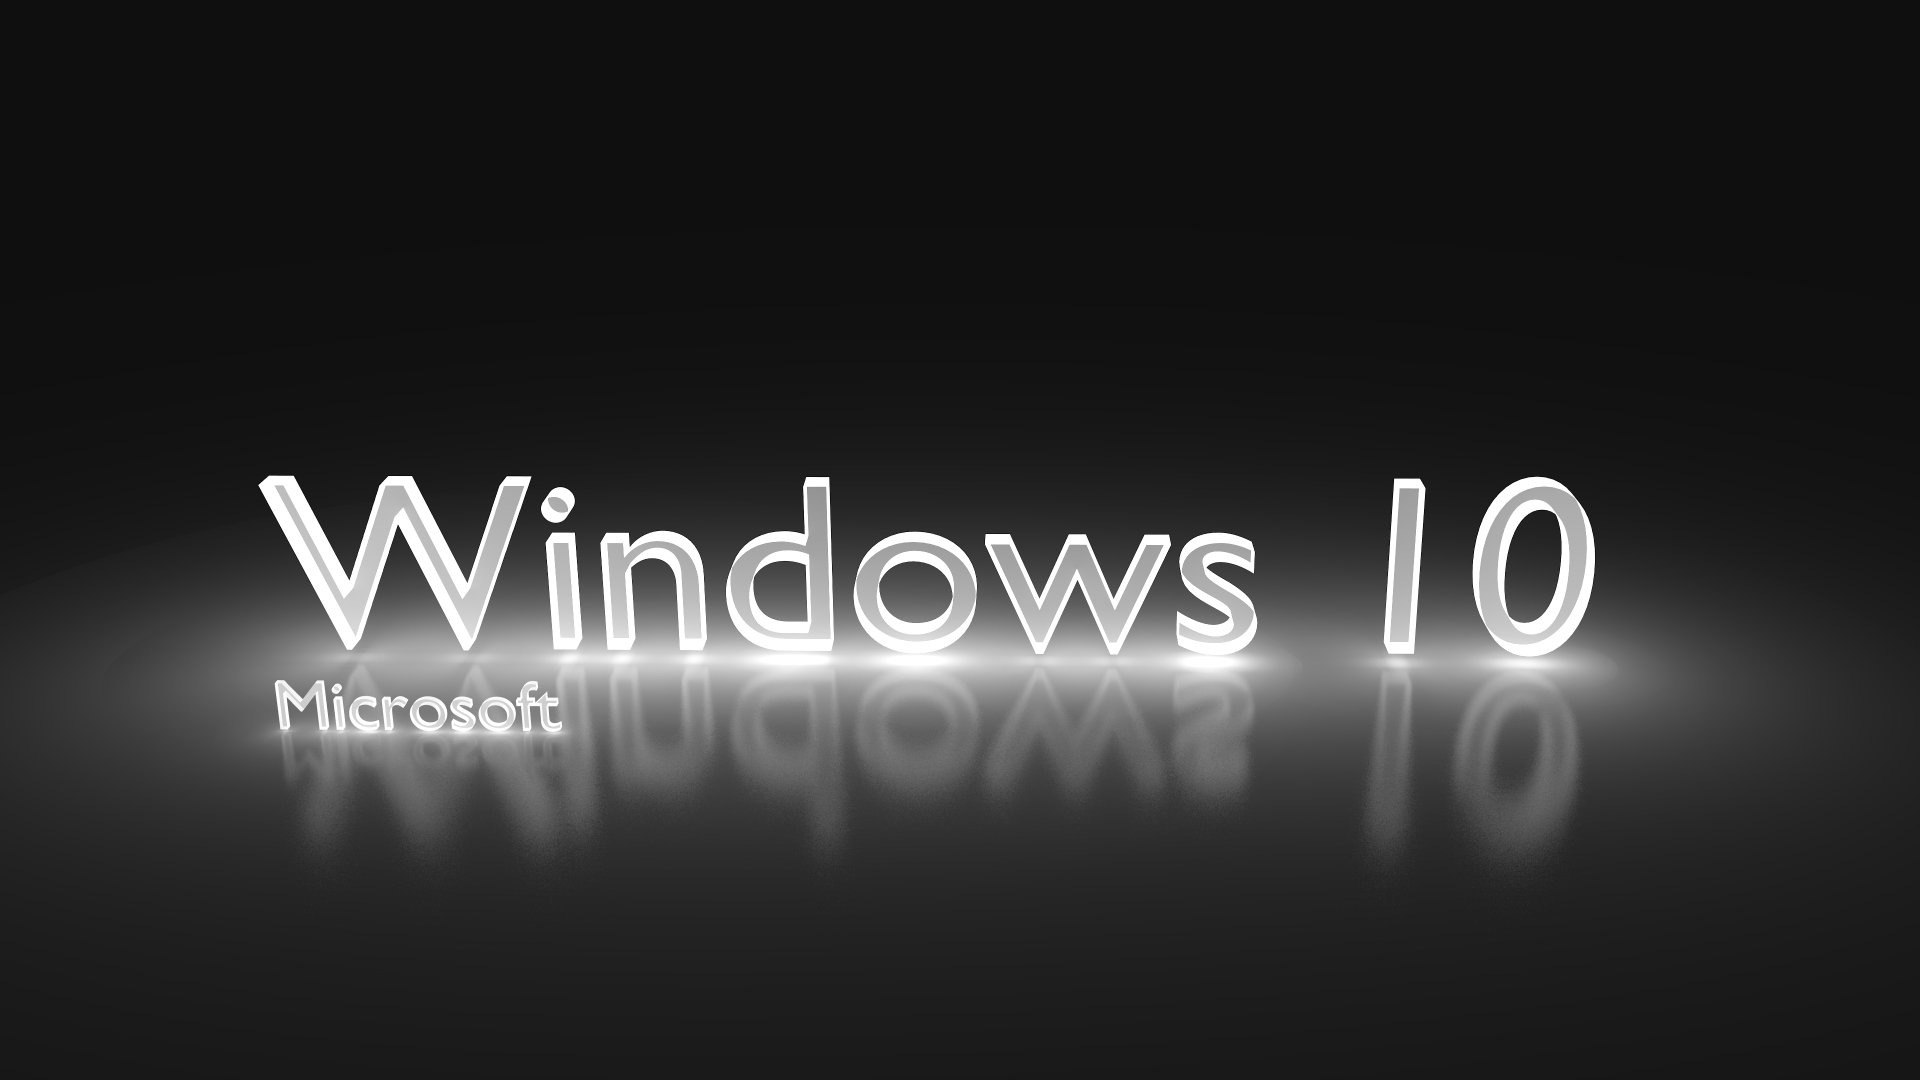 Windows 10 glowing white 4k Ultra HD Fond d'écran and ...